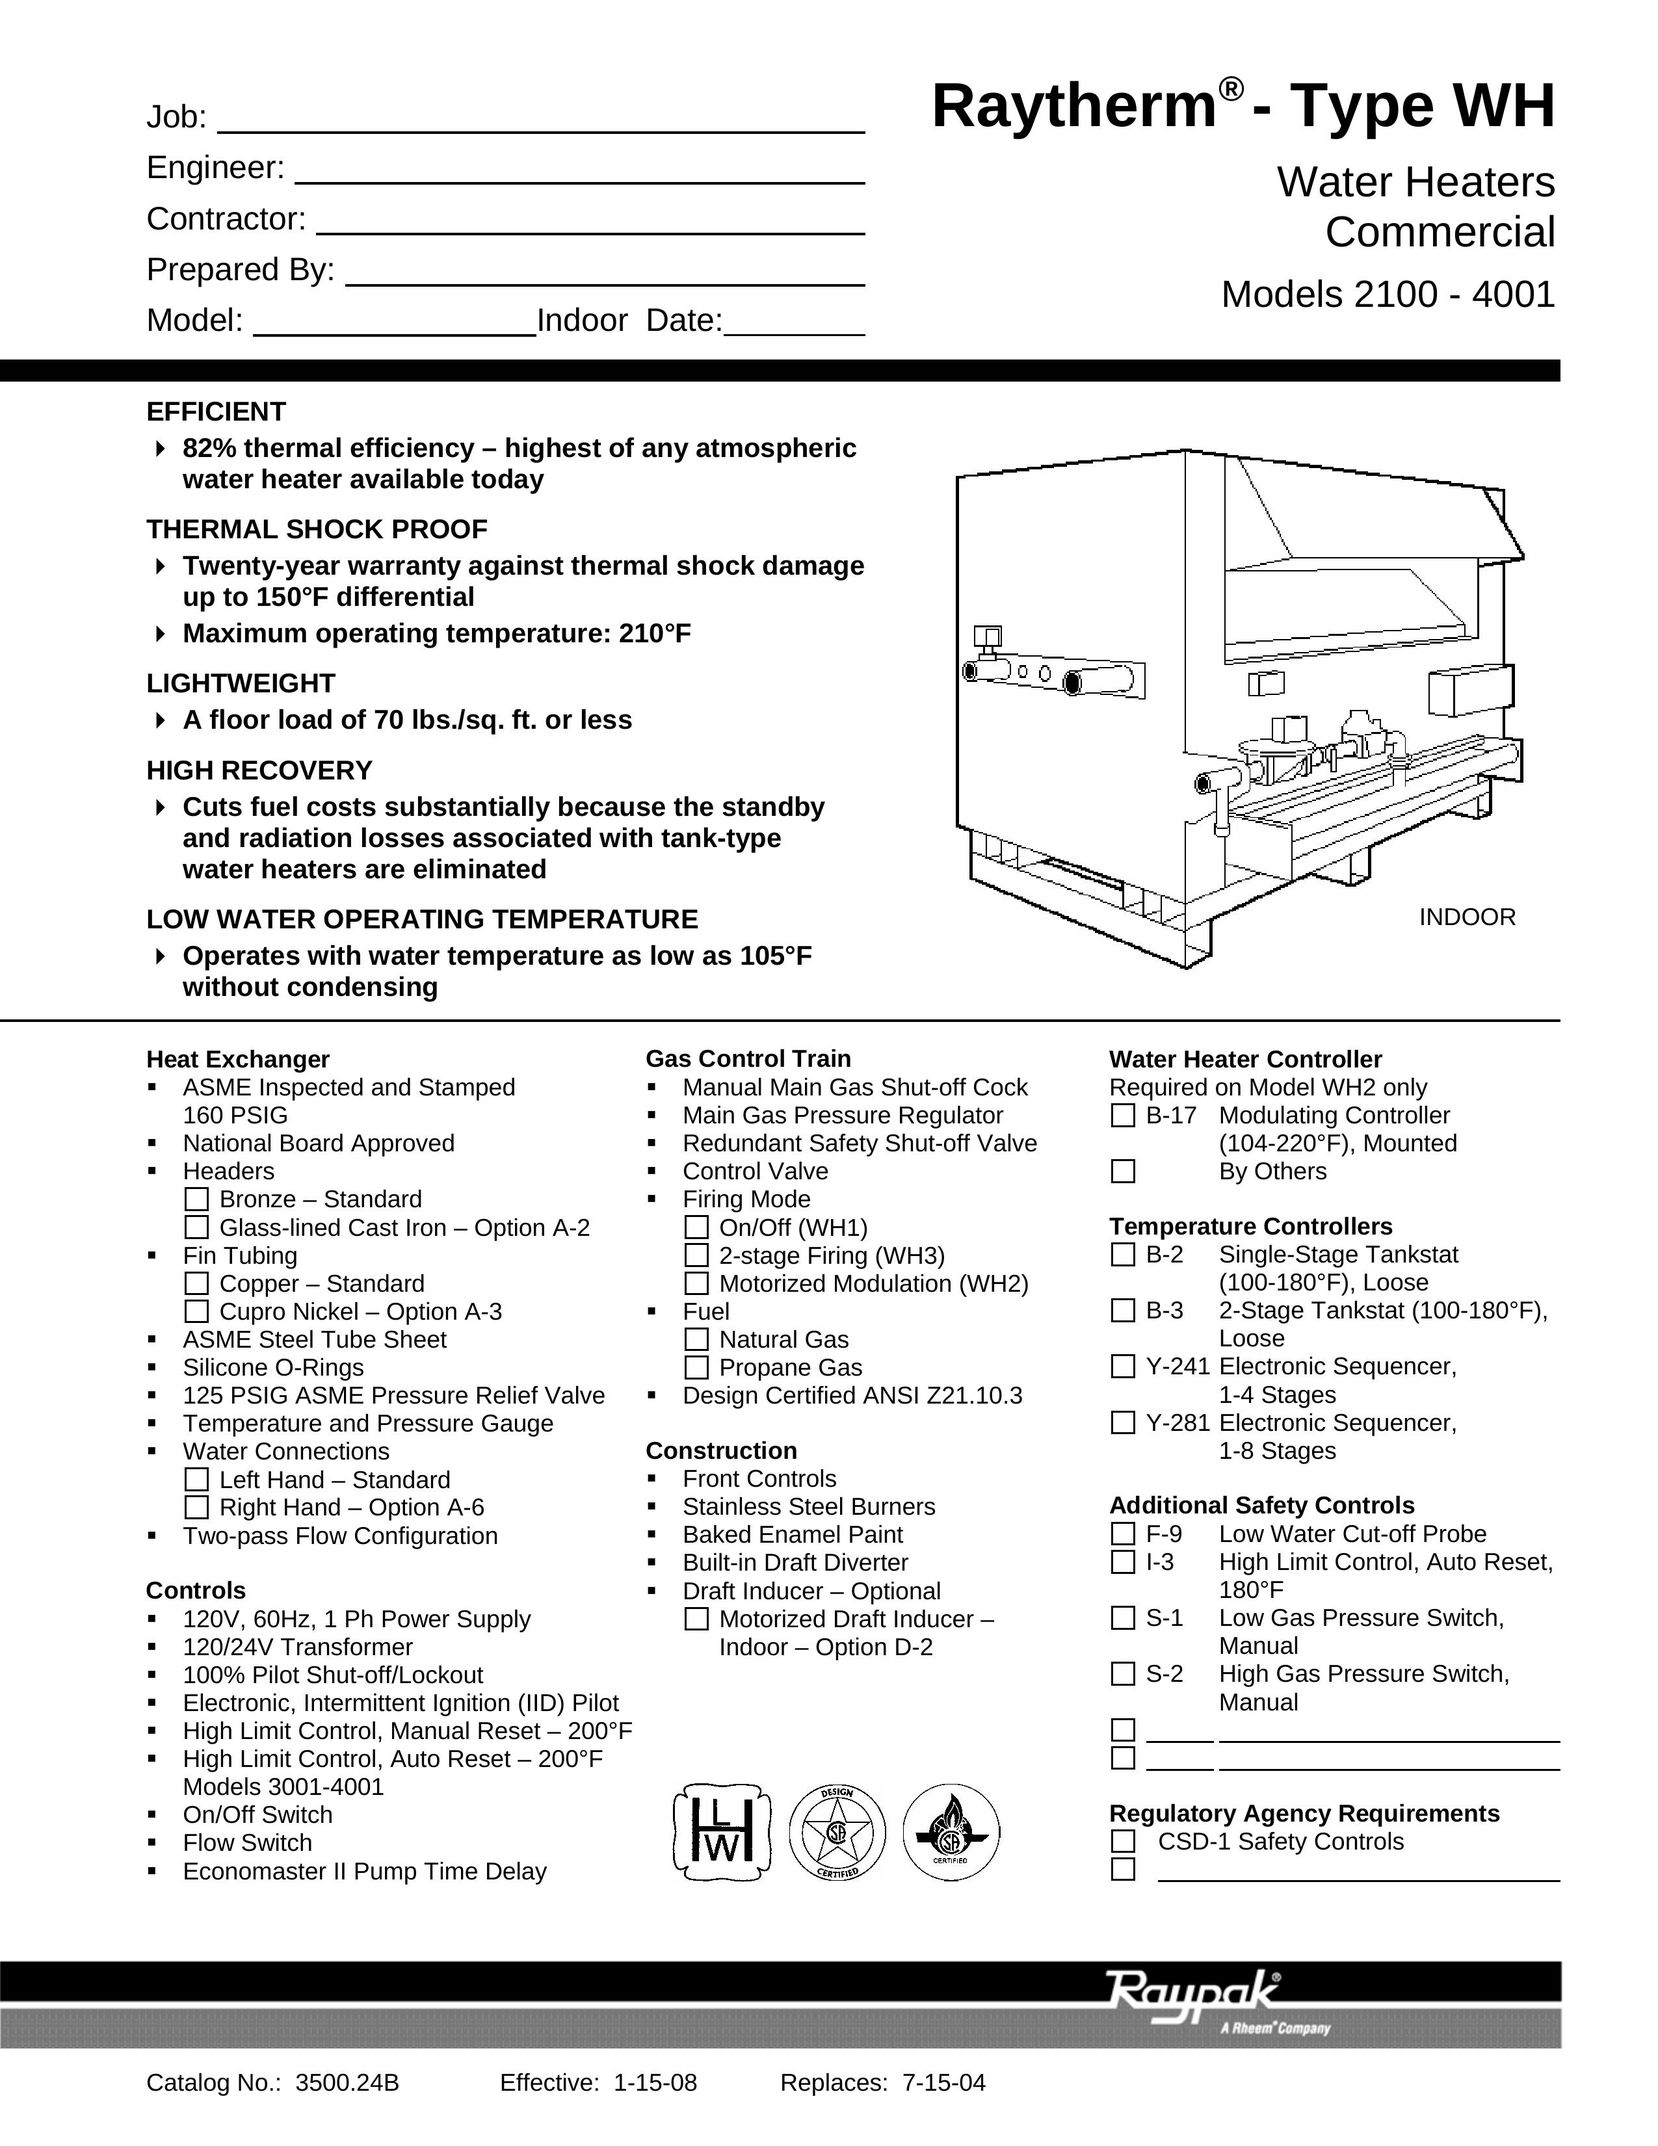 Raypak 2100 - 4001 Water Heater User Manual